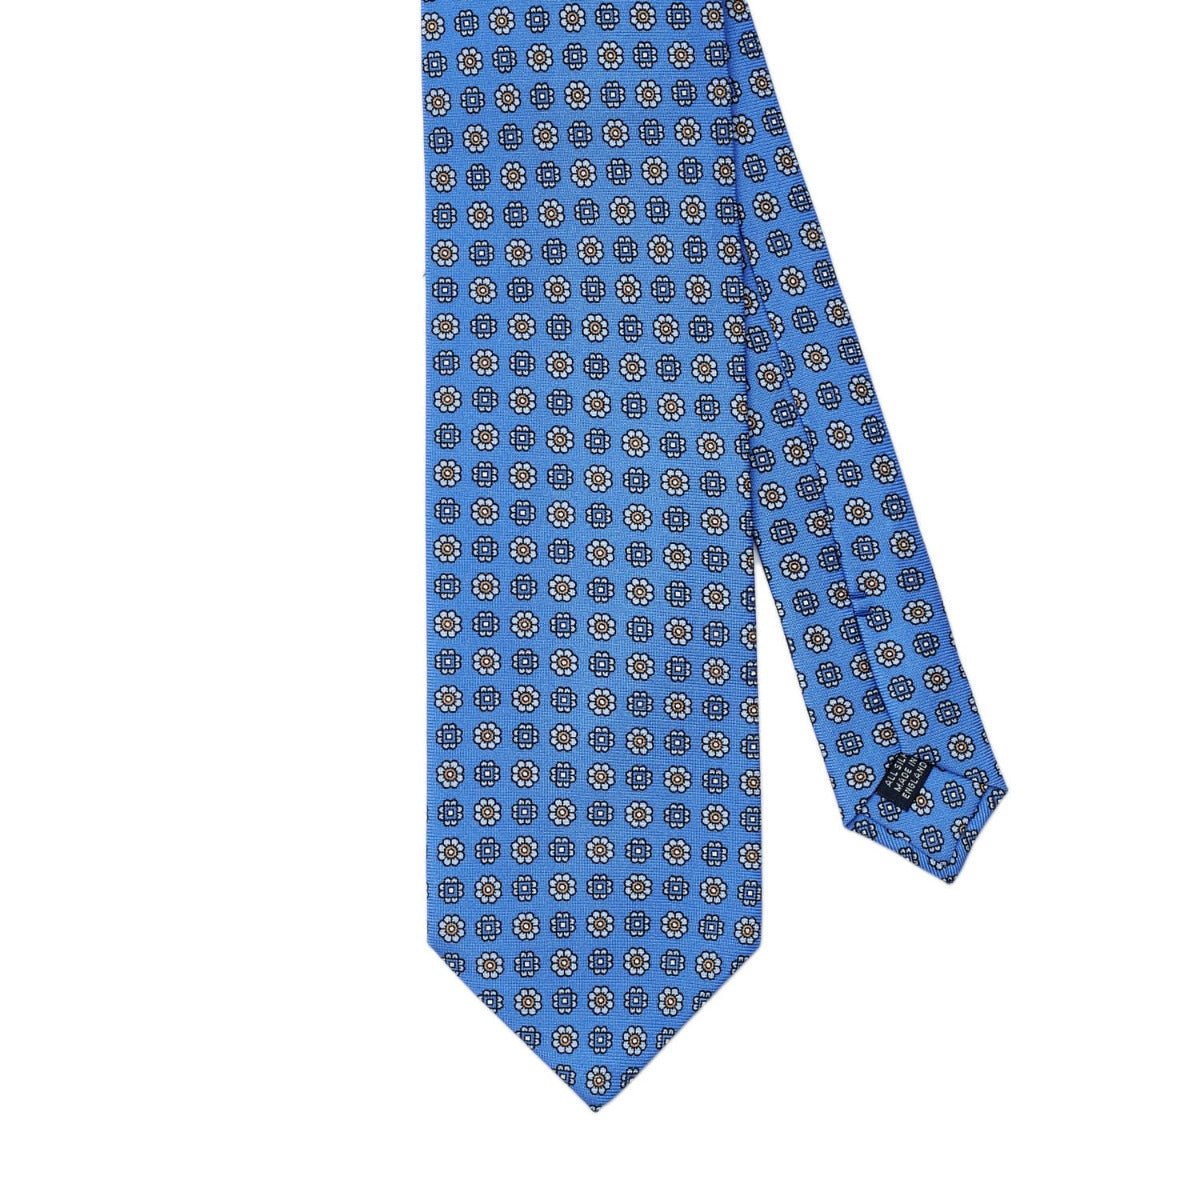 A Sovereign Grade Light Blue Floral 36oz Printed Silk Tie from KirbyAllison.com.